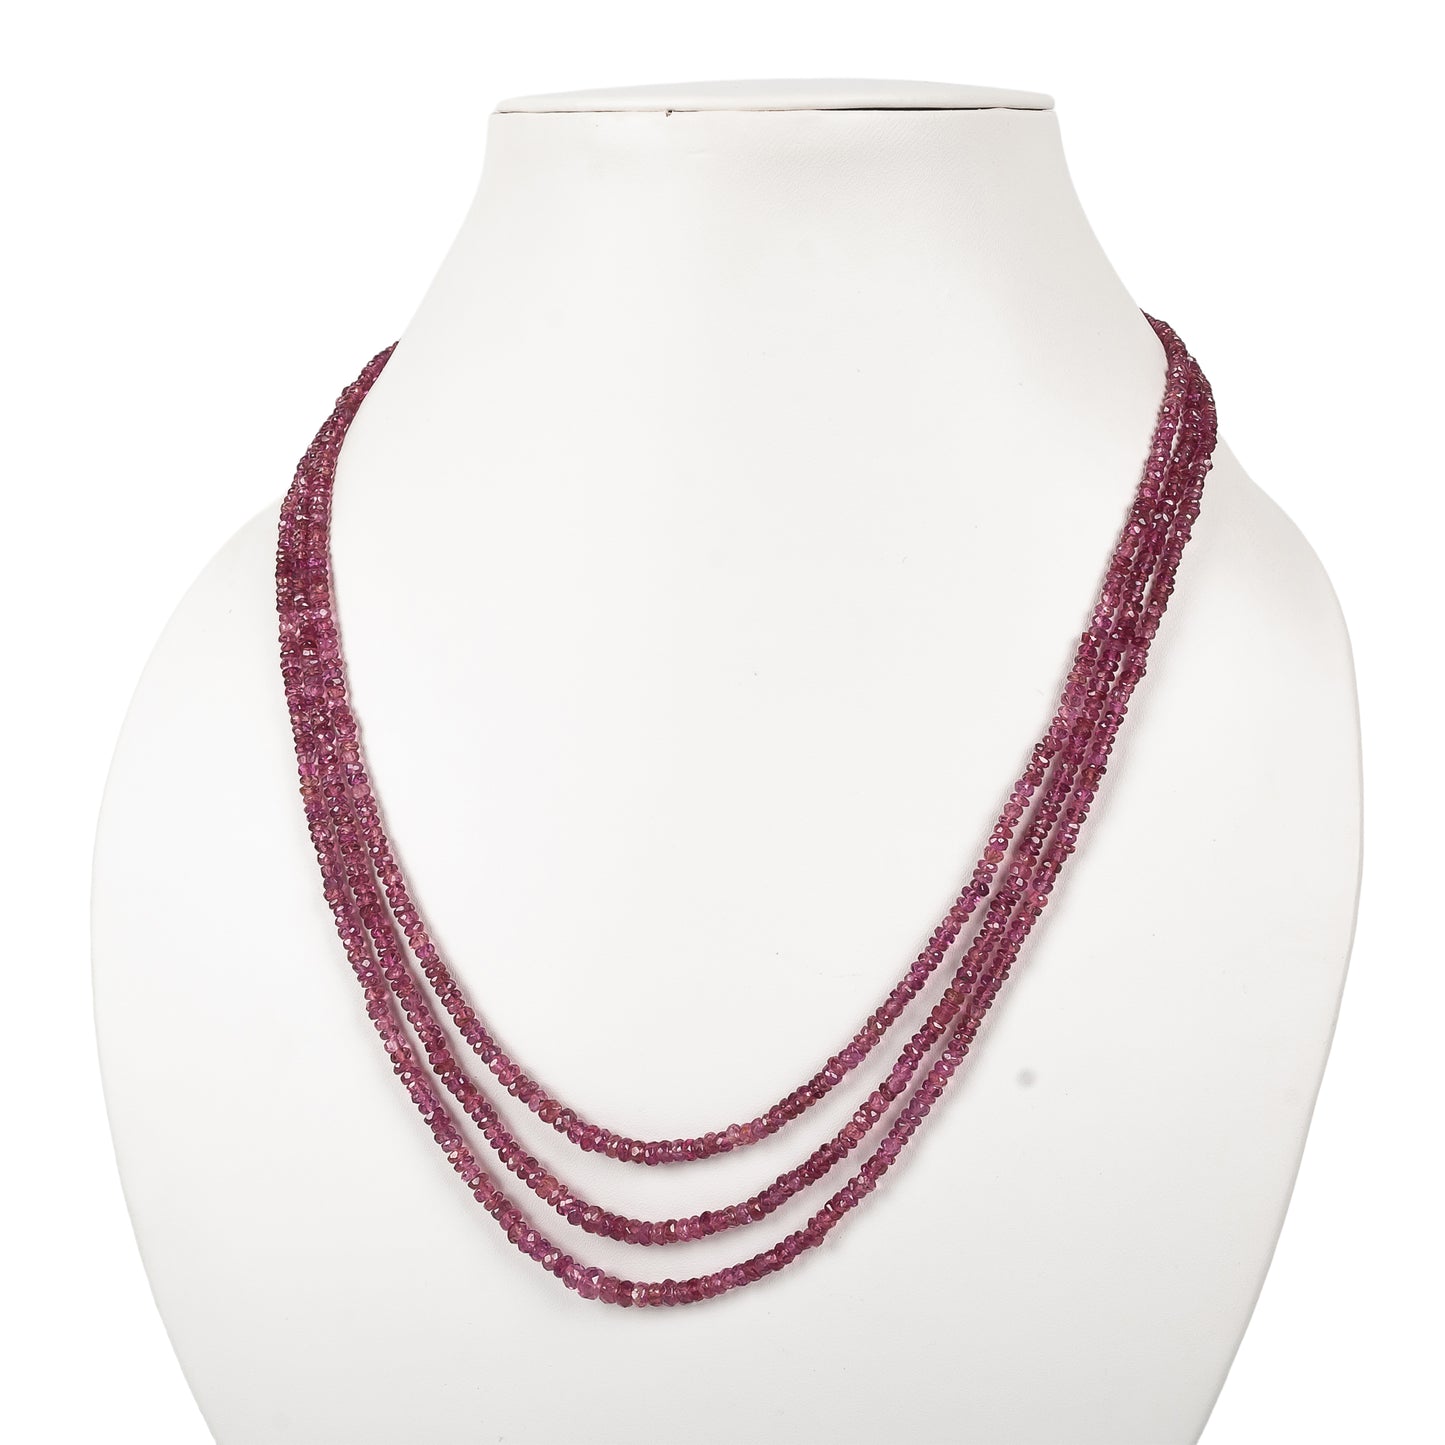 Natural Pink Tourmaline Gemstone Beads Necklace Jewelry